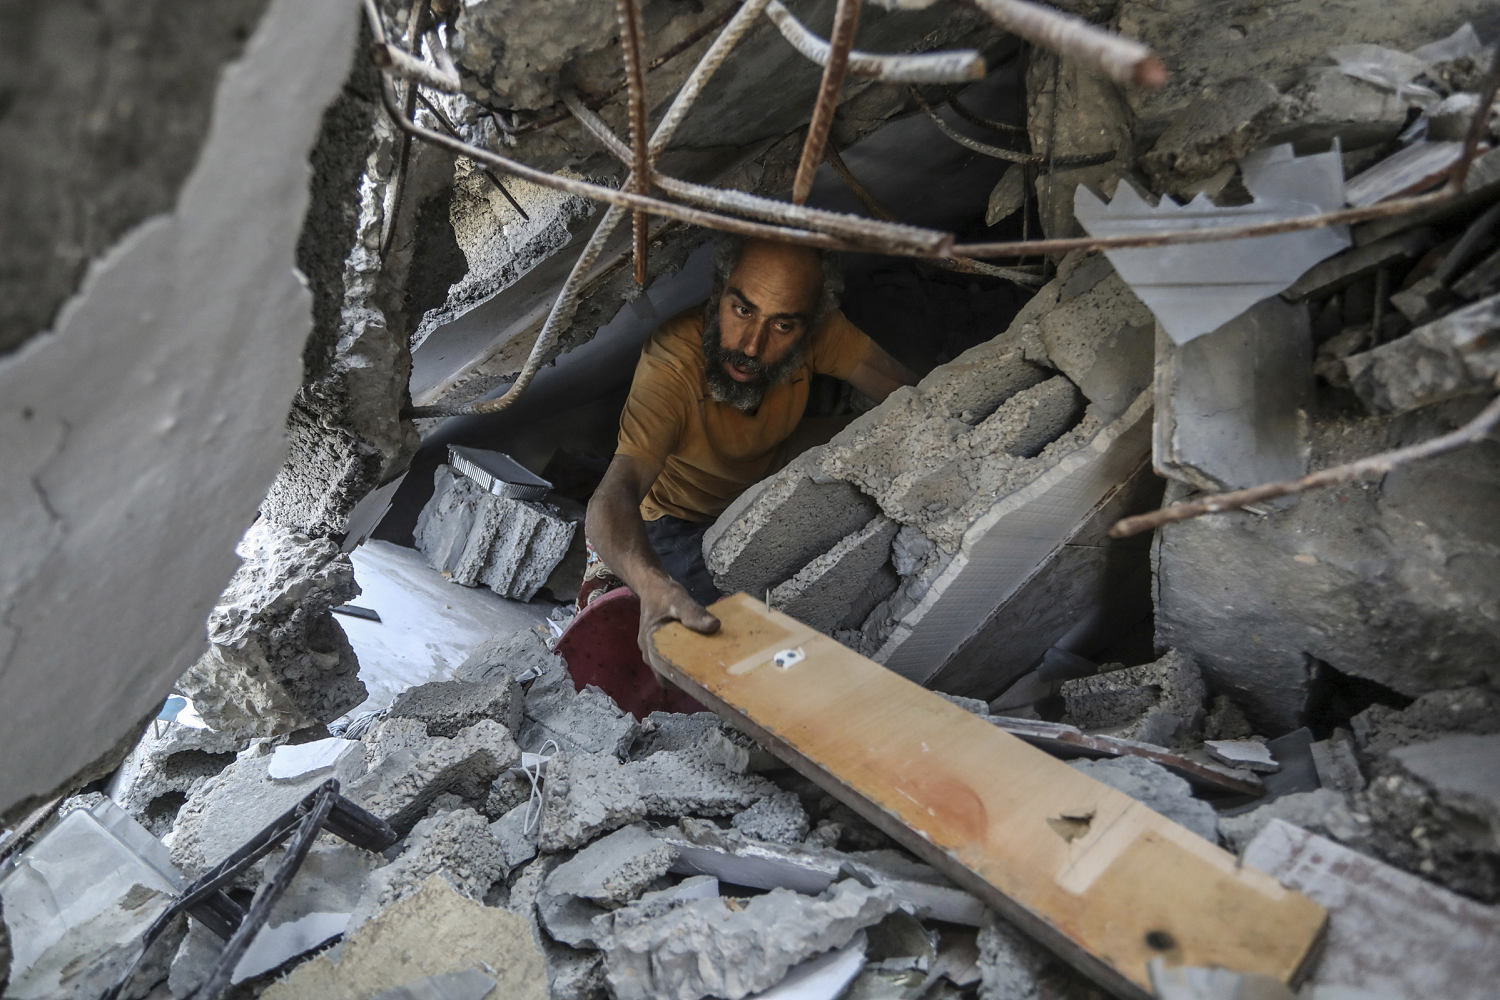 Rebuilding bombed Gaza homes may take 80 years, U.N. says